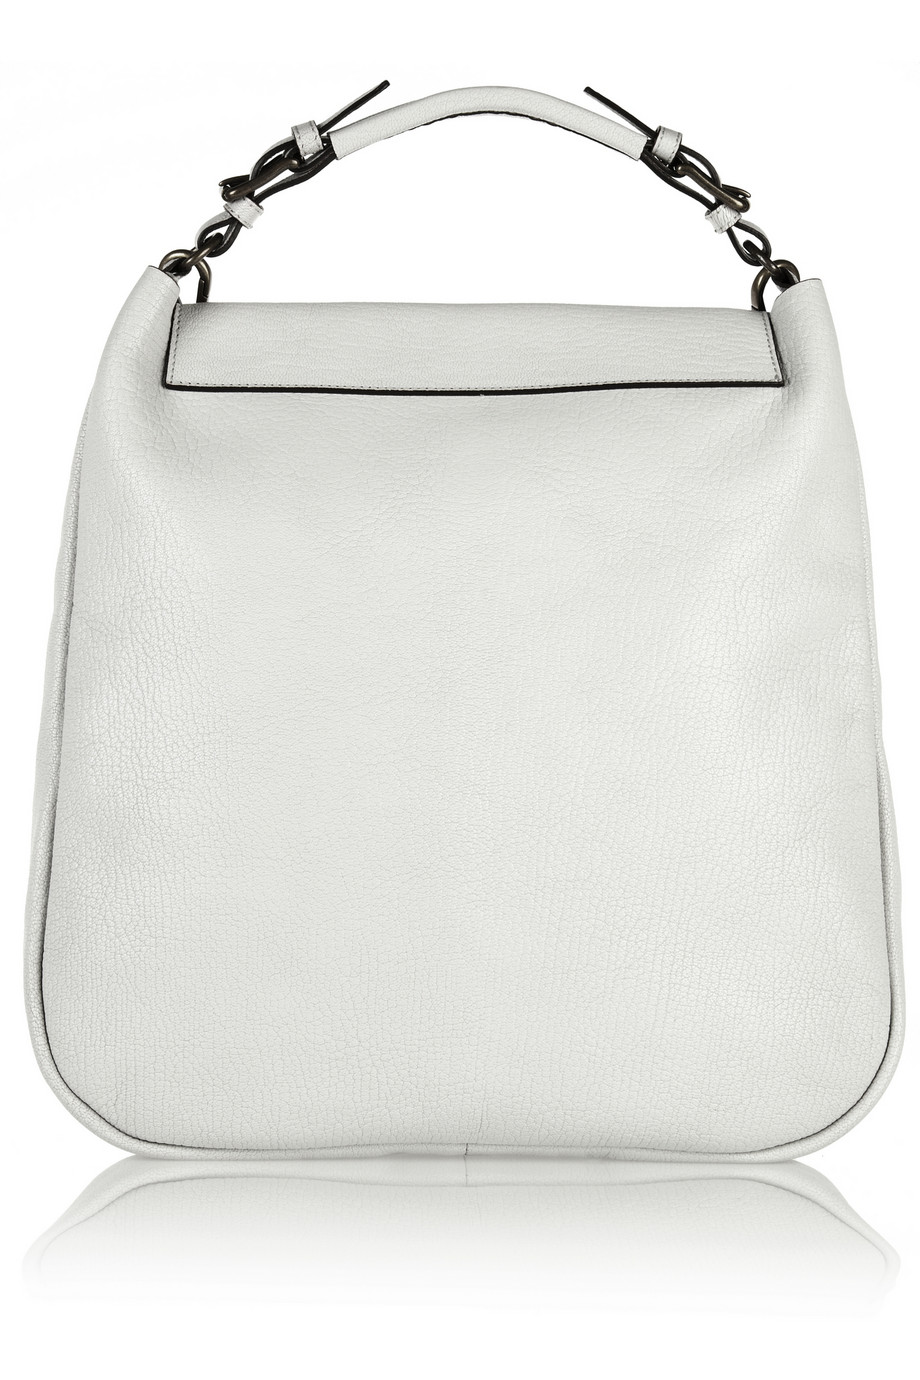 Marni Texturedleather Shoulder Bag in White - Lyst